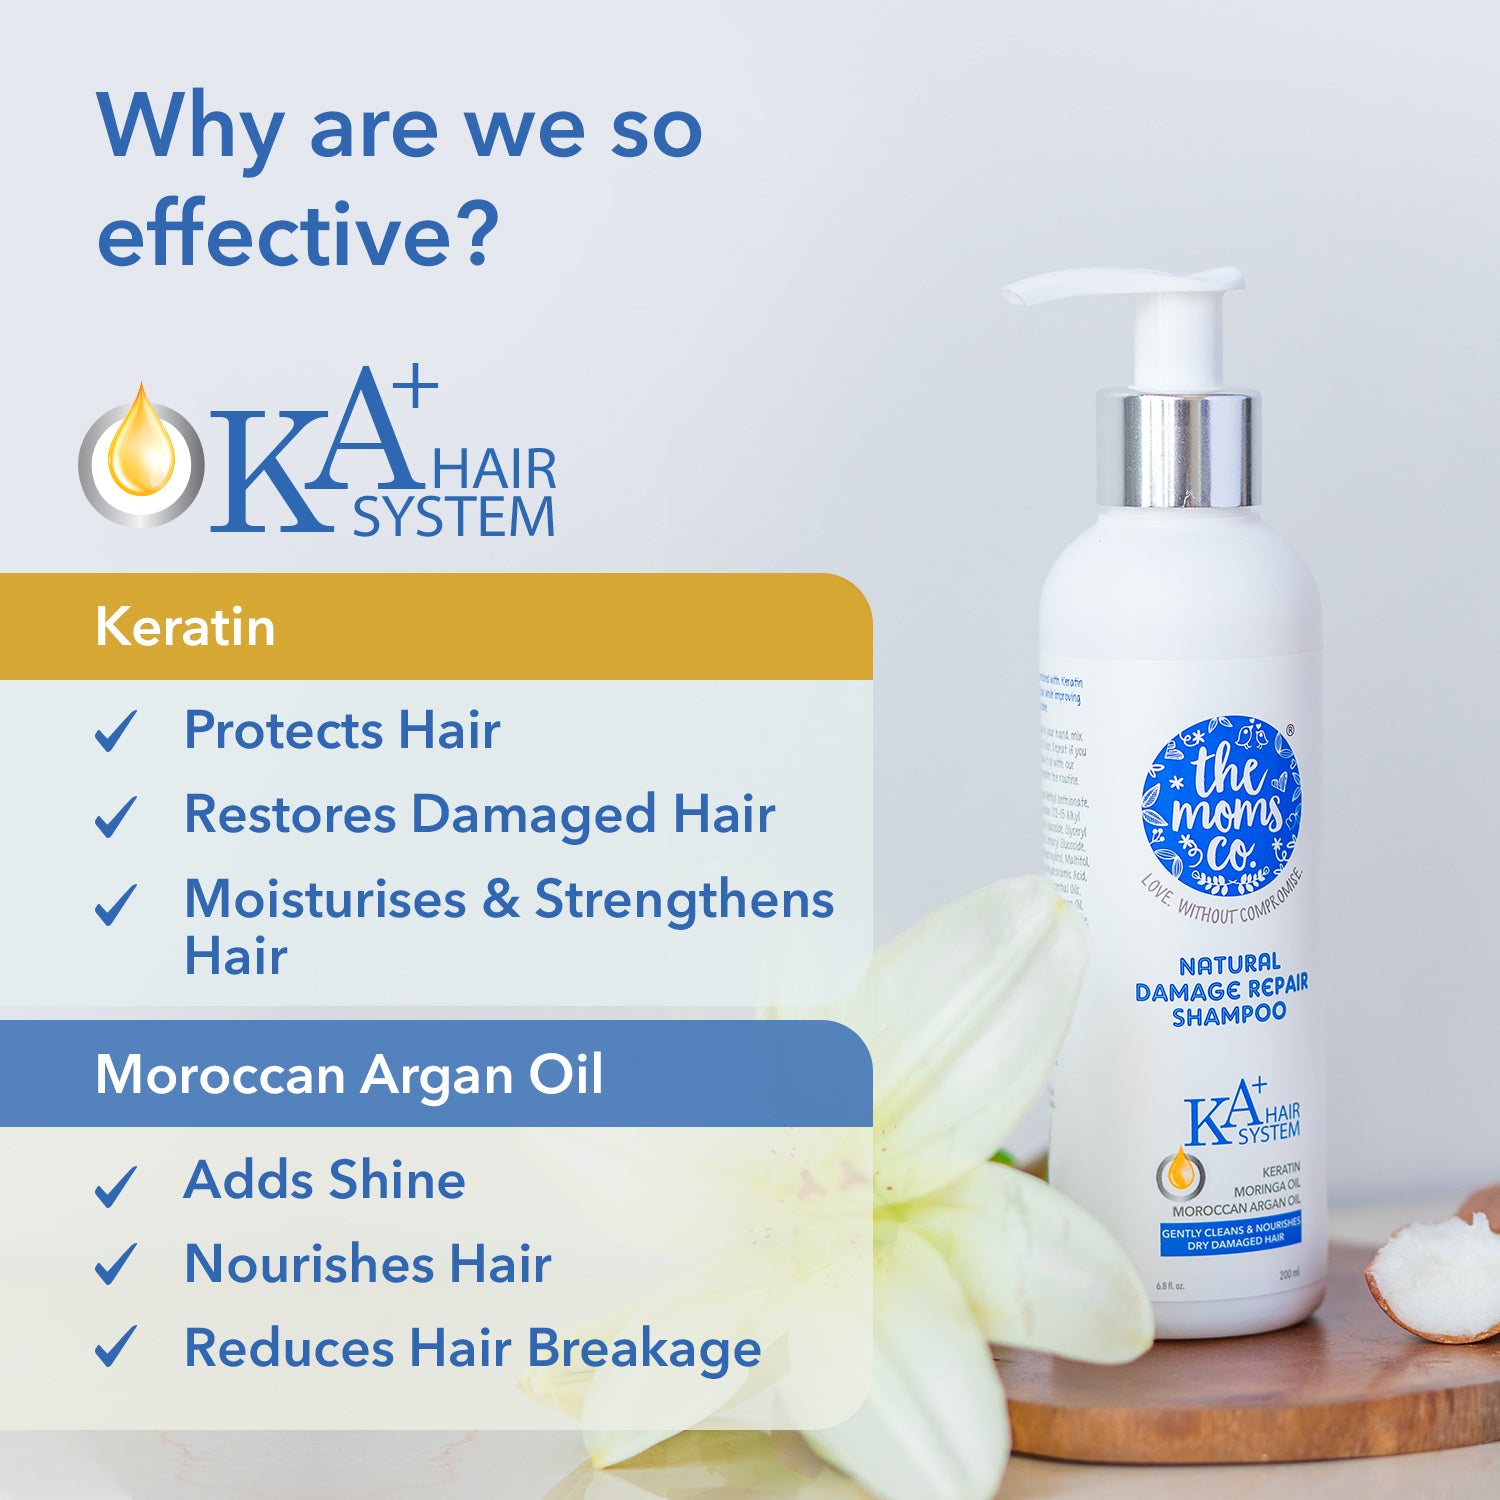 The Moms Co. Natural Damage Repair KA + Hair Shampoo with Keratin and Moroccan Argan Oil for Dry & Damaged Hair 200ml